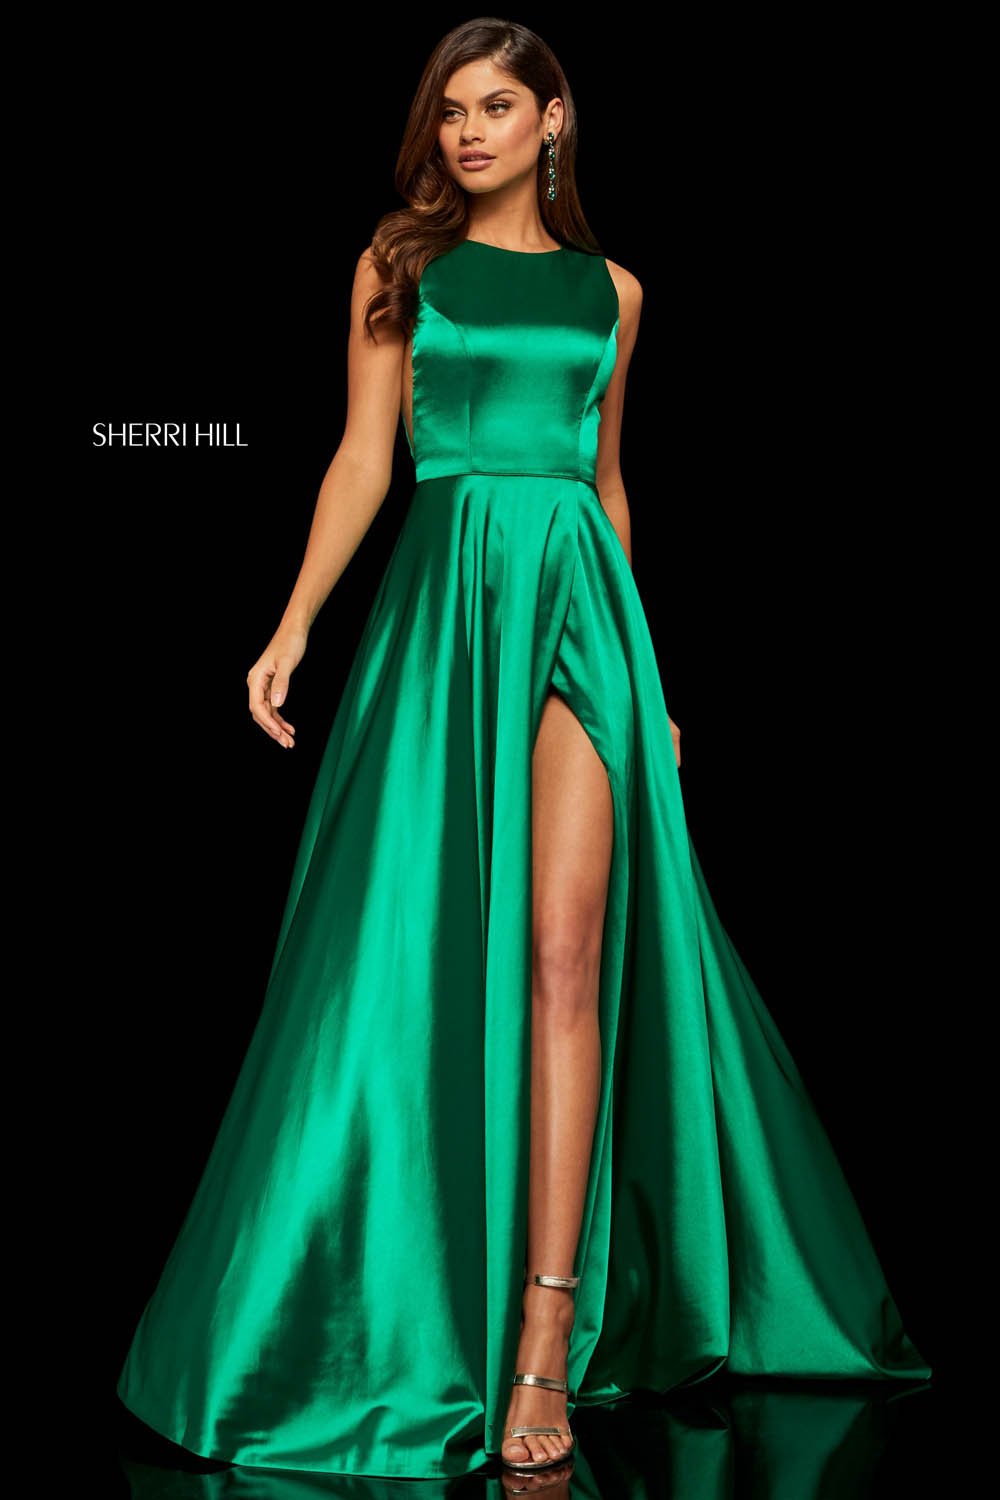 Sherri Hill Emerald Green Dress Top ...